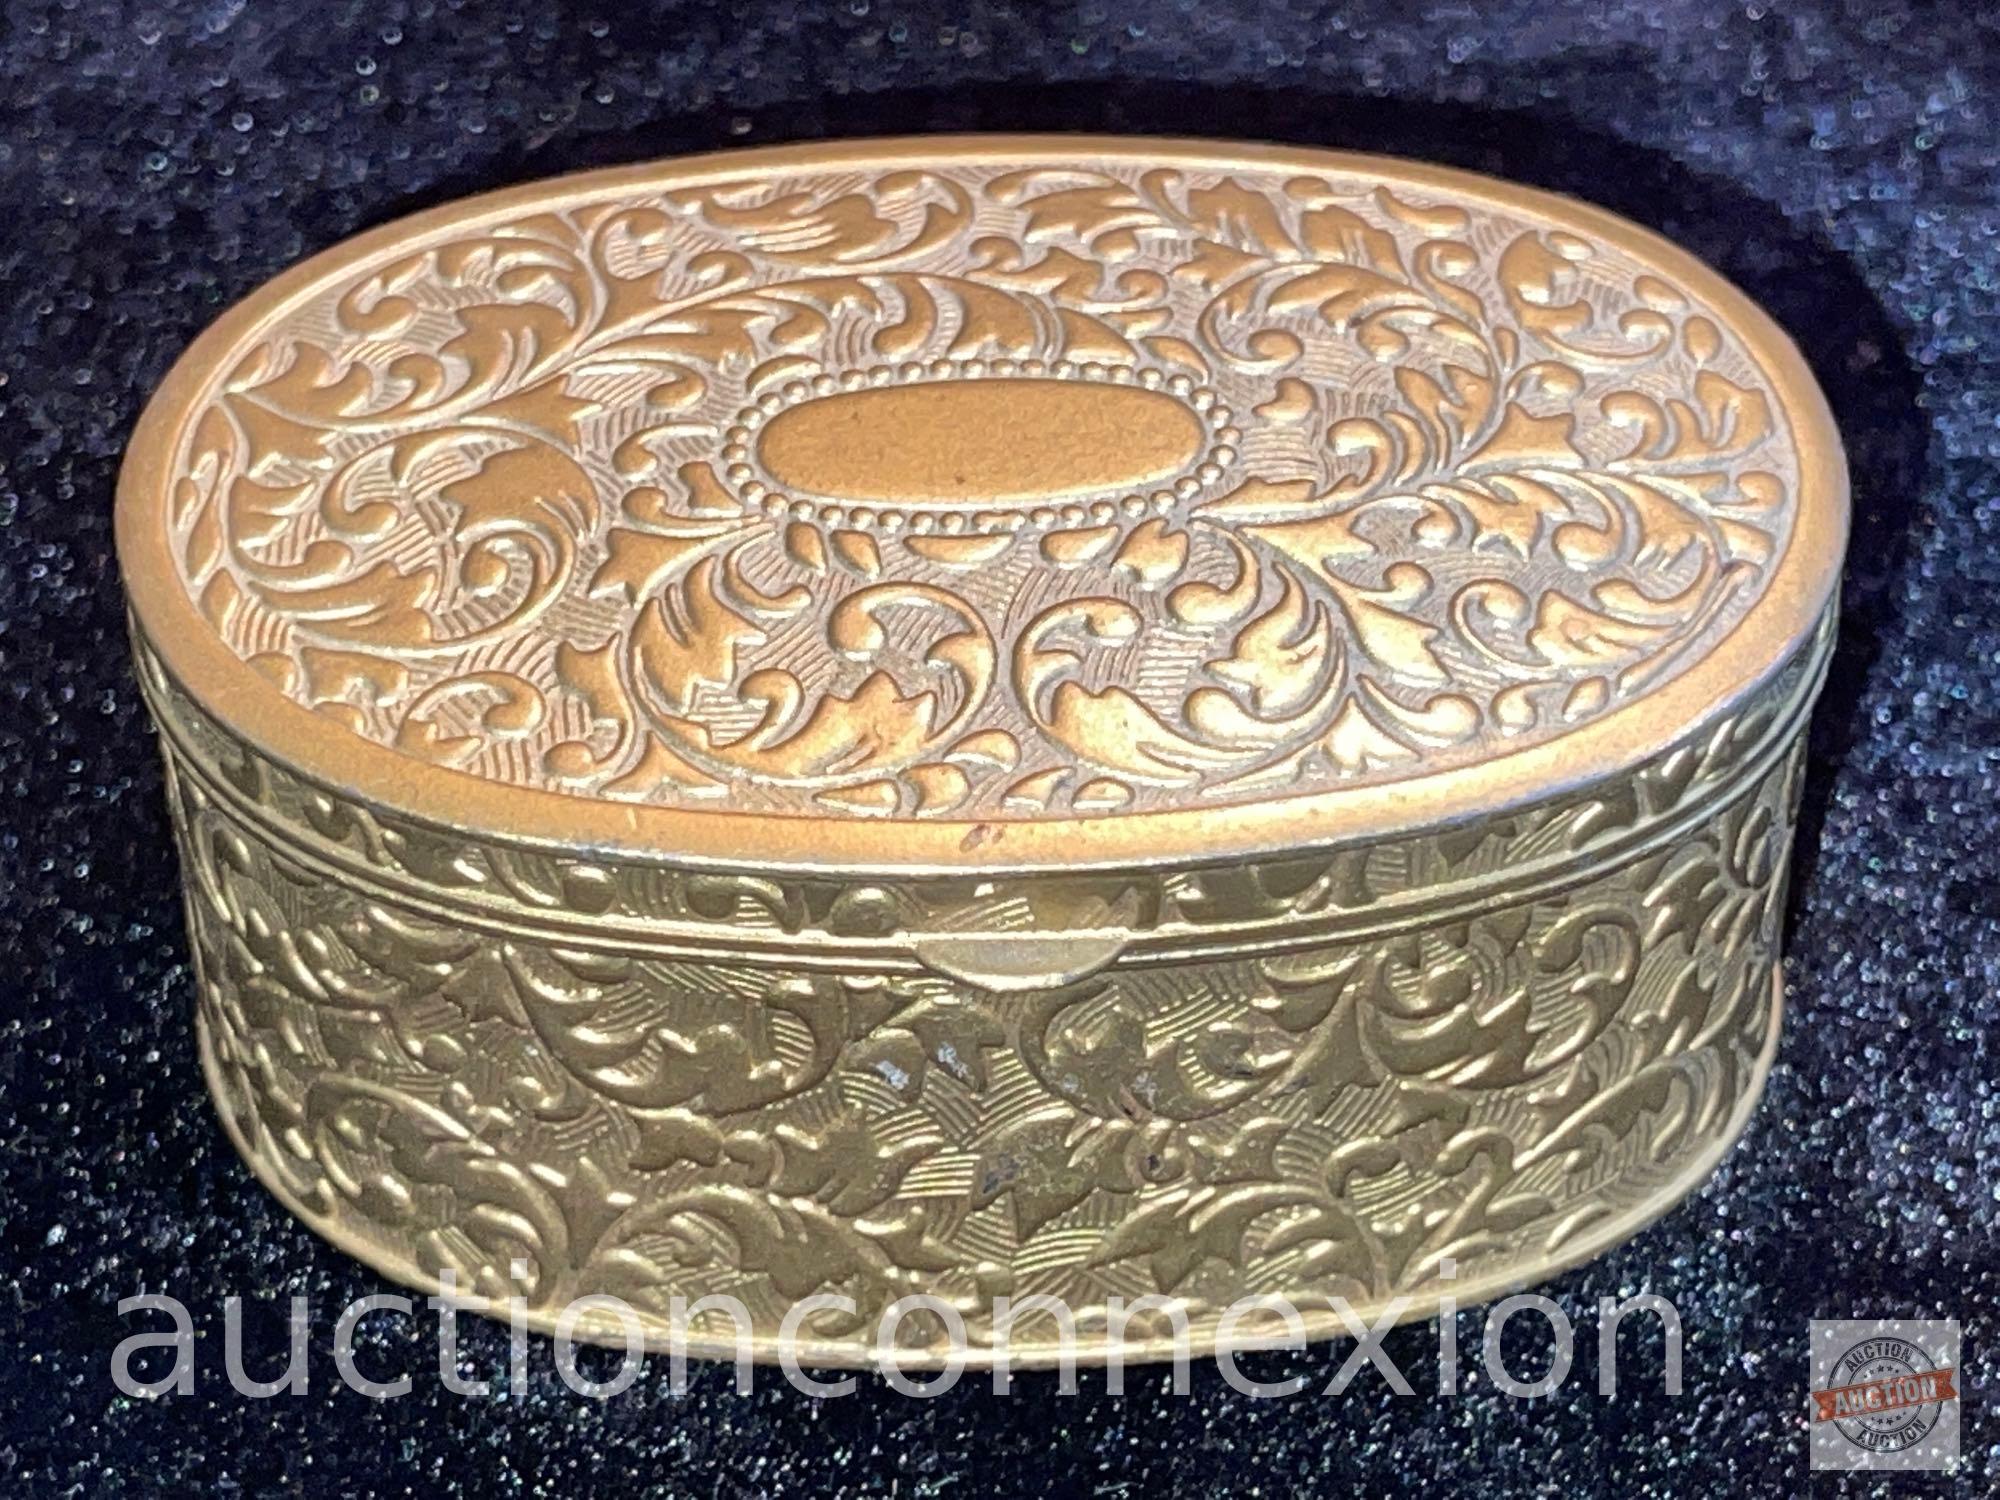 Ornate vintage oval lined trinket box, 1.5"hx3.5"wx2.5"d